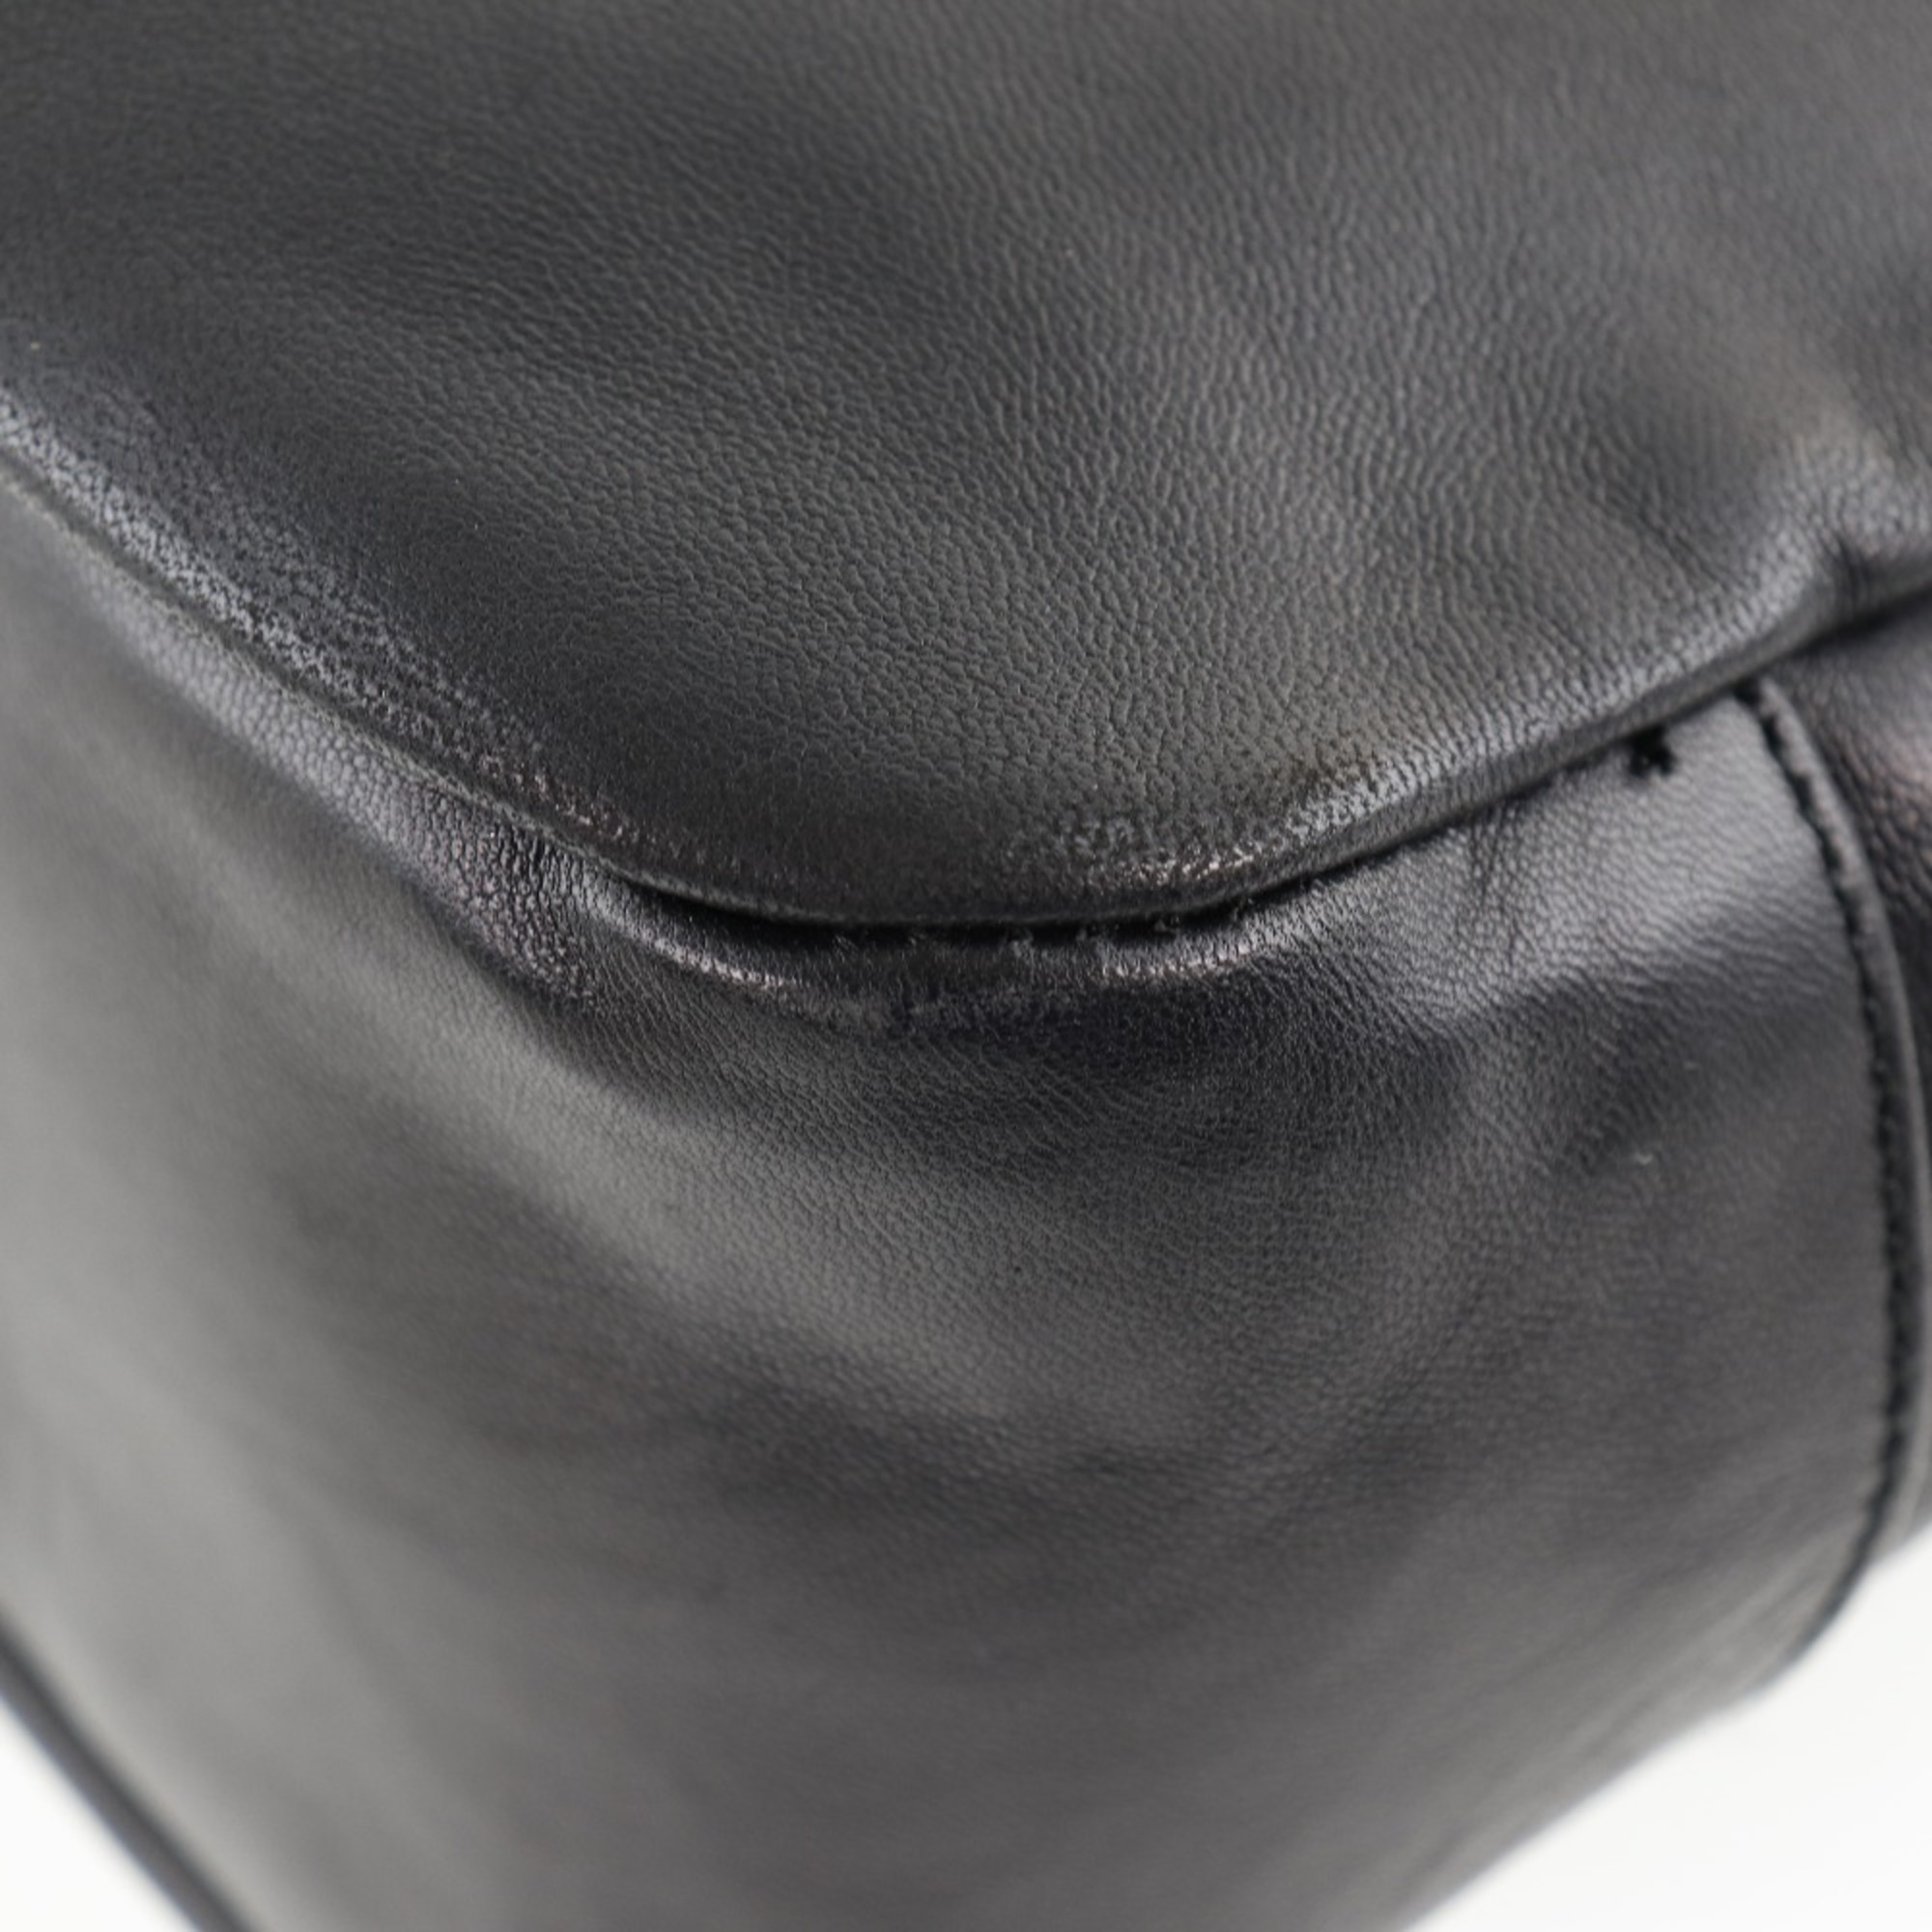 Salvatore Ferragamo One Shoulder Gancini D217685 Leather Black Women's Bag